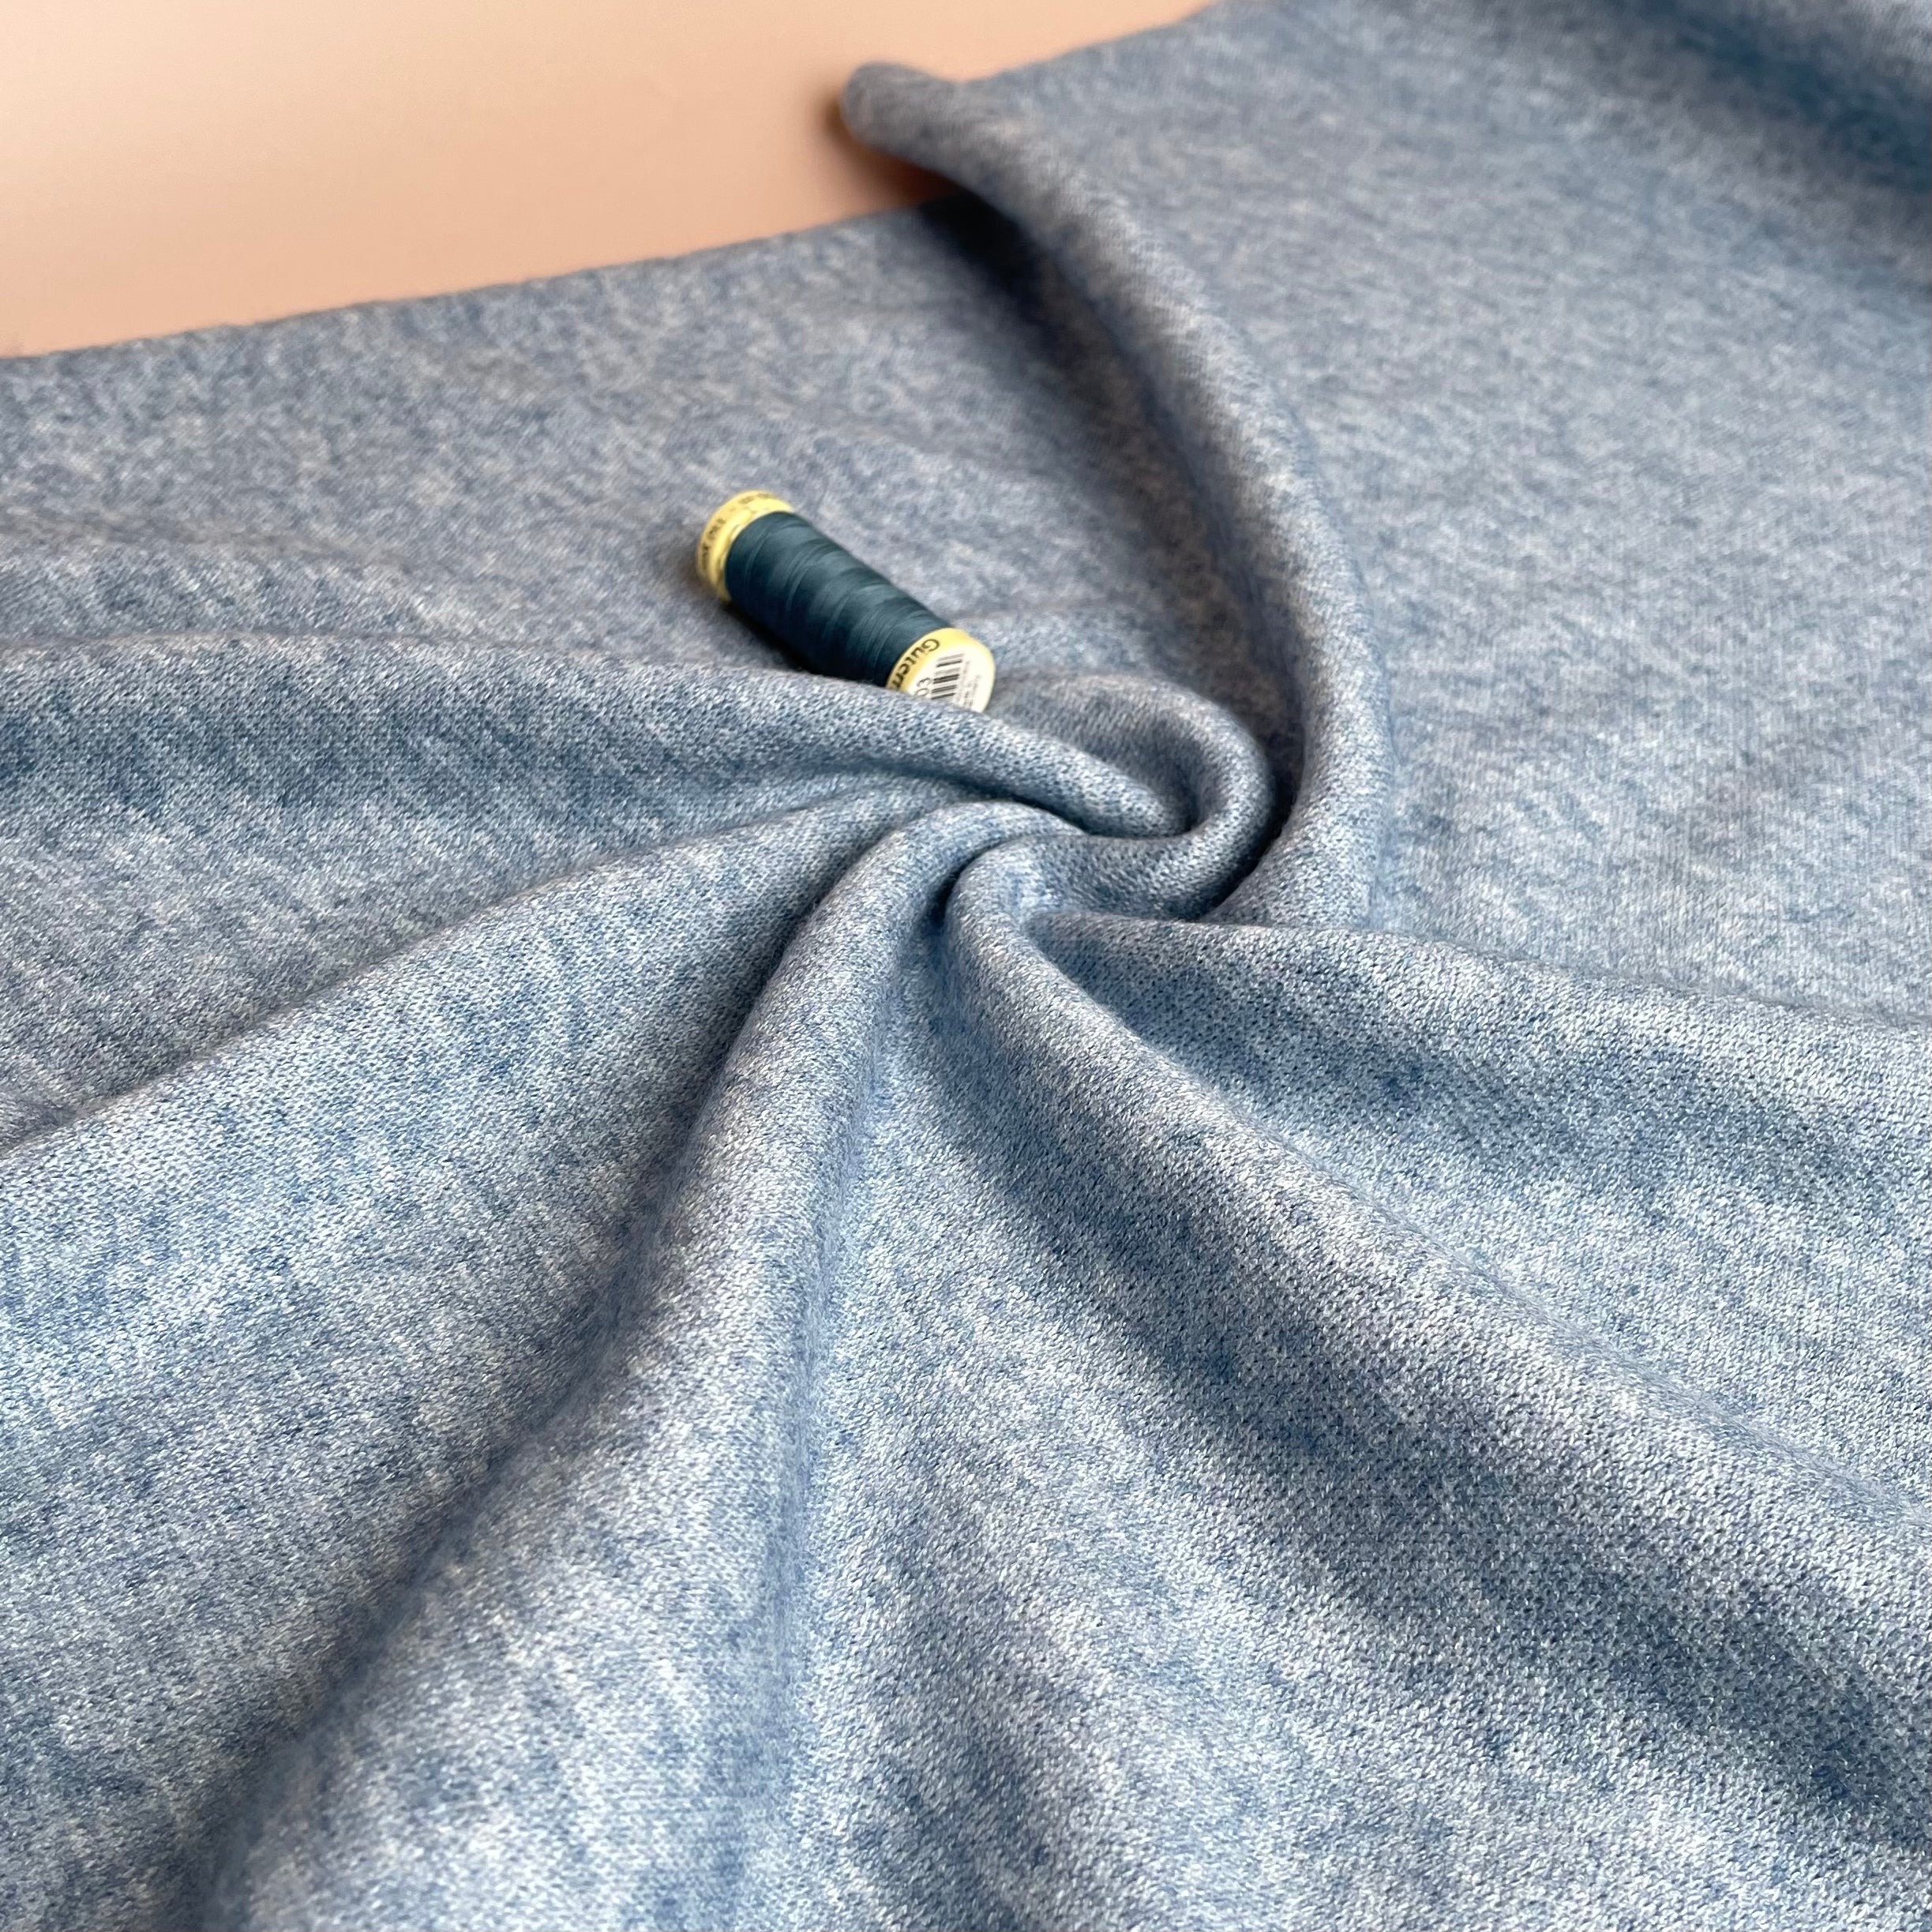 Snug Viscose Blend Sweater Knit in Adriatic Blue Melange